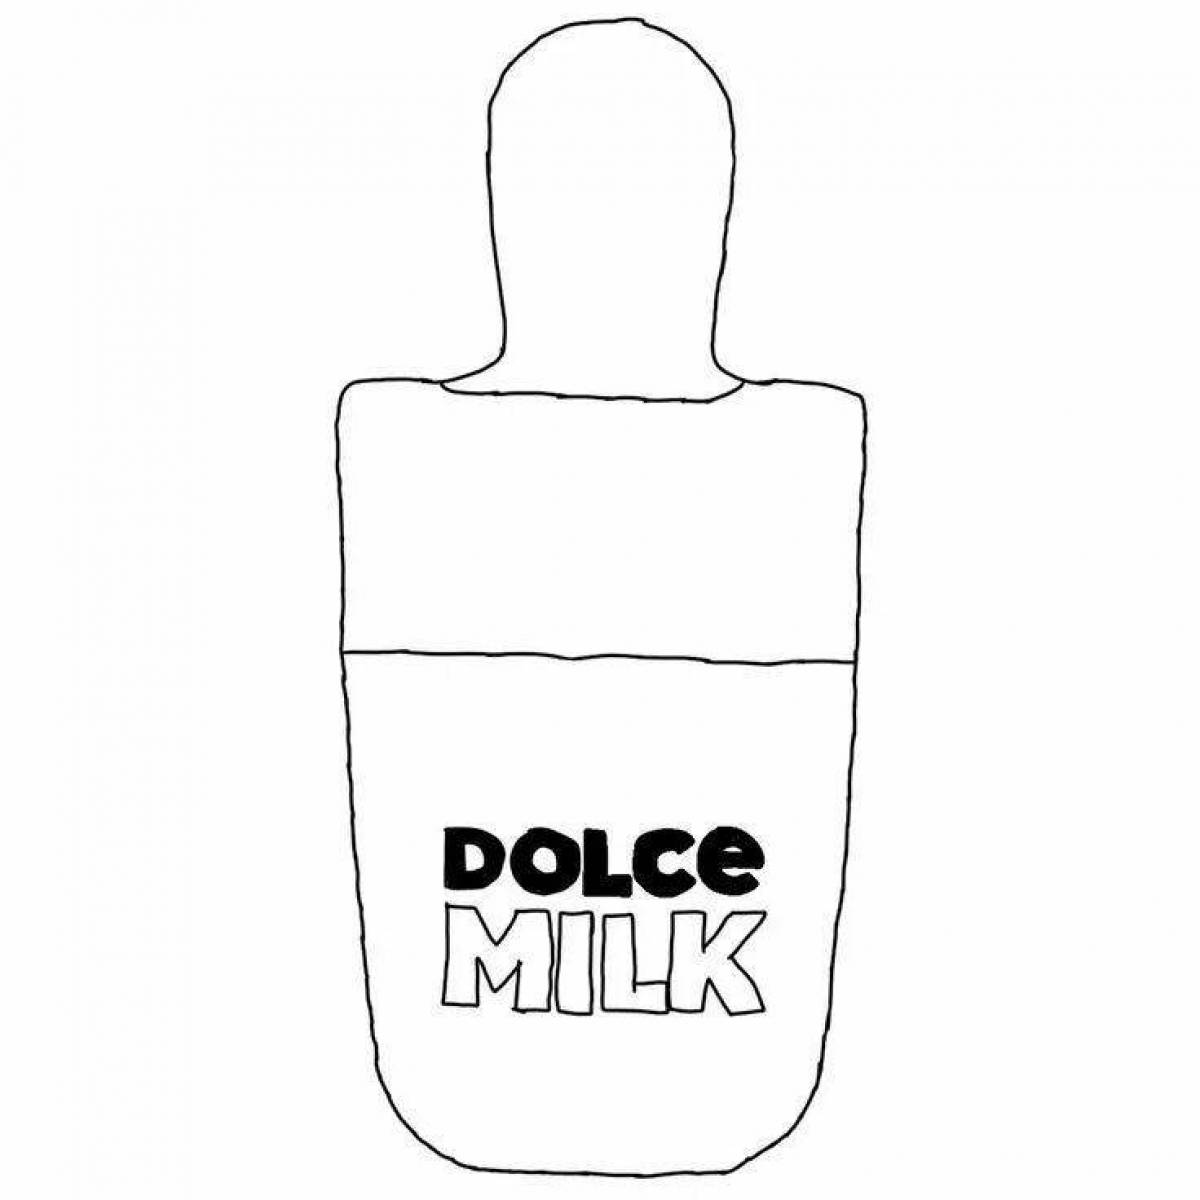 Joyous dolce milk coloring page